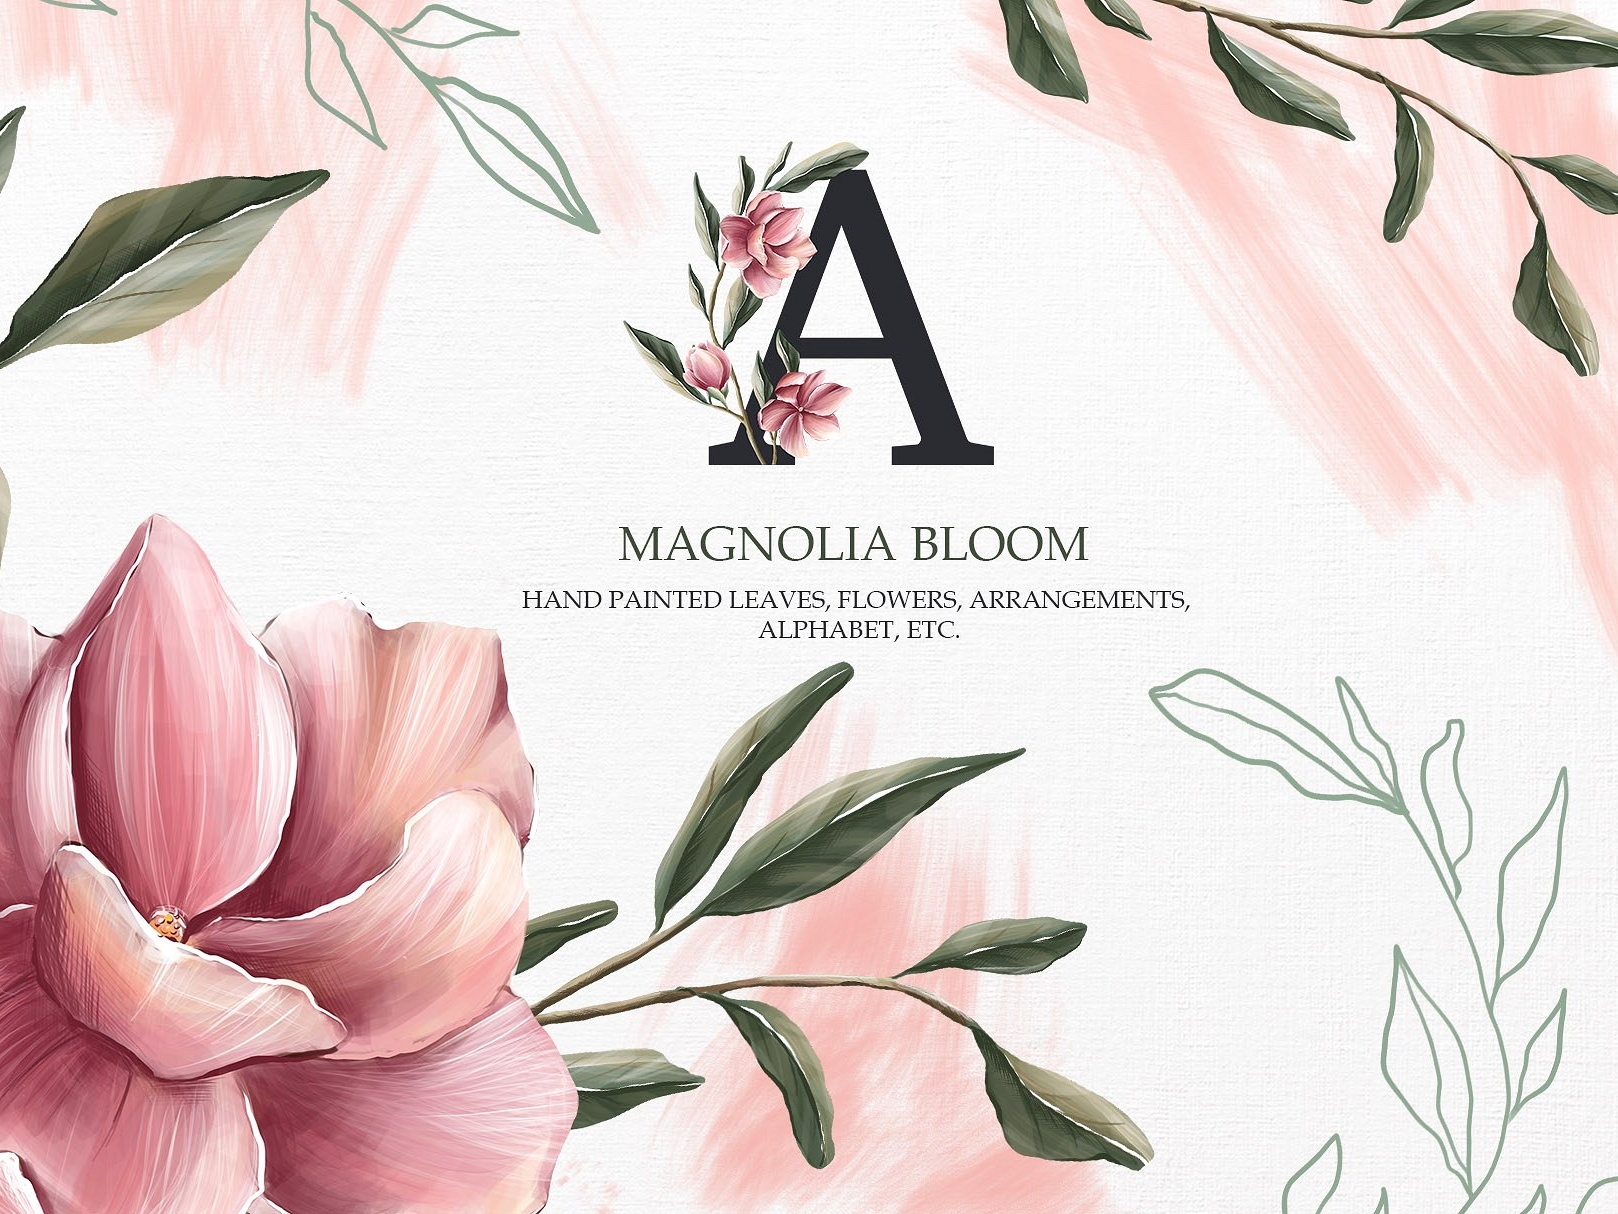 Bloom collection. Magnolia Blooms. Магнолия дизайн упаковки. Магнолия Блум схема.